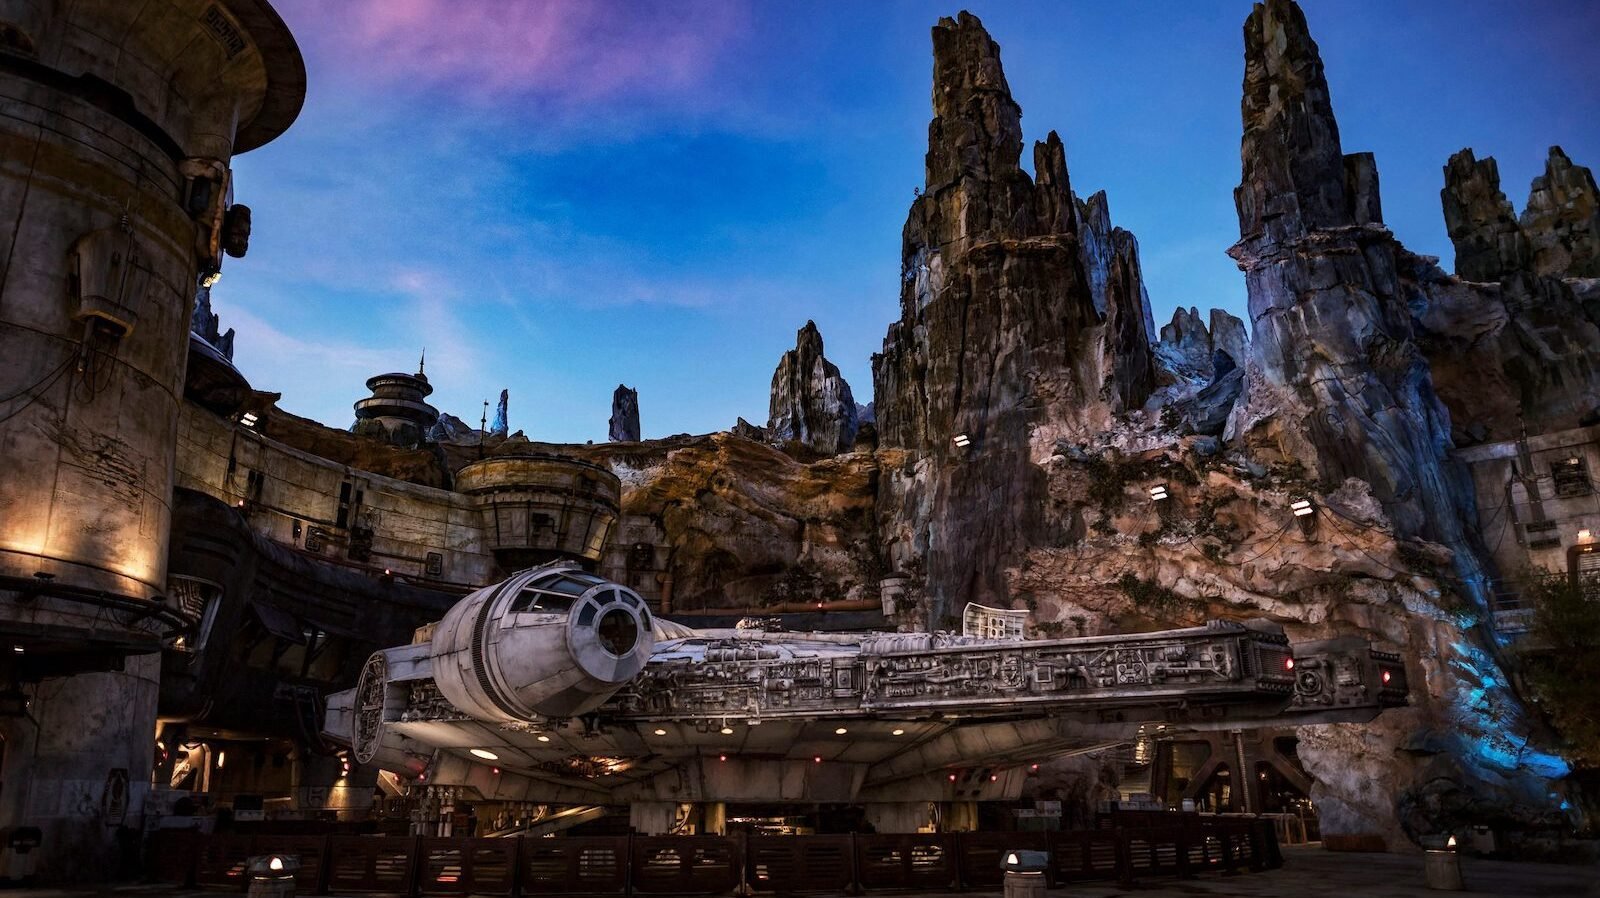 Star Wars Movie Milk History - Disney's Star Wars Theme Park Is